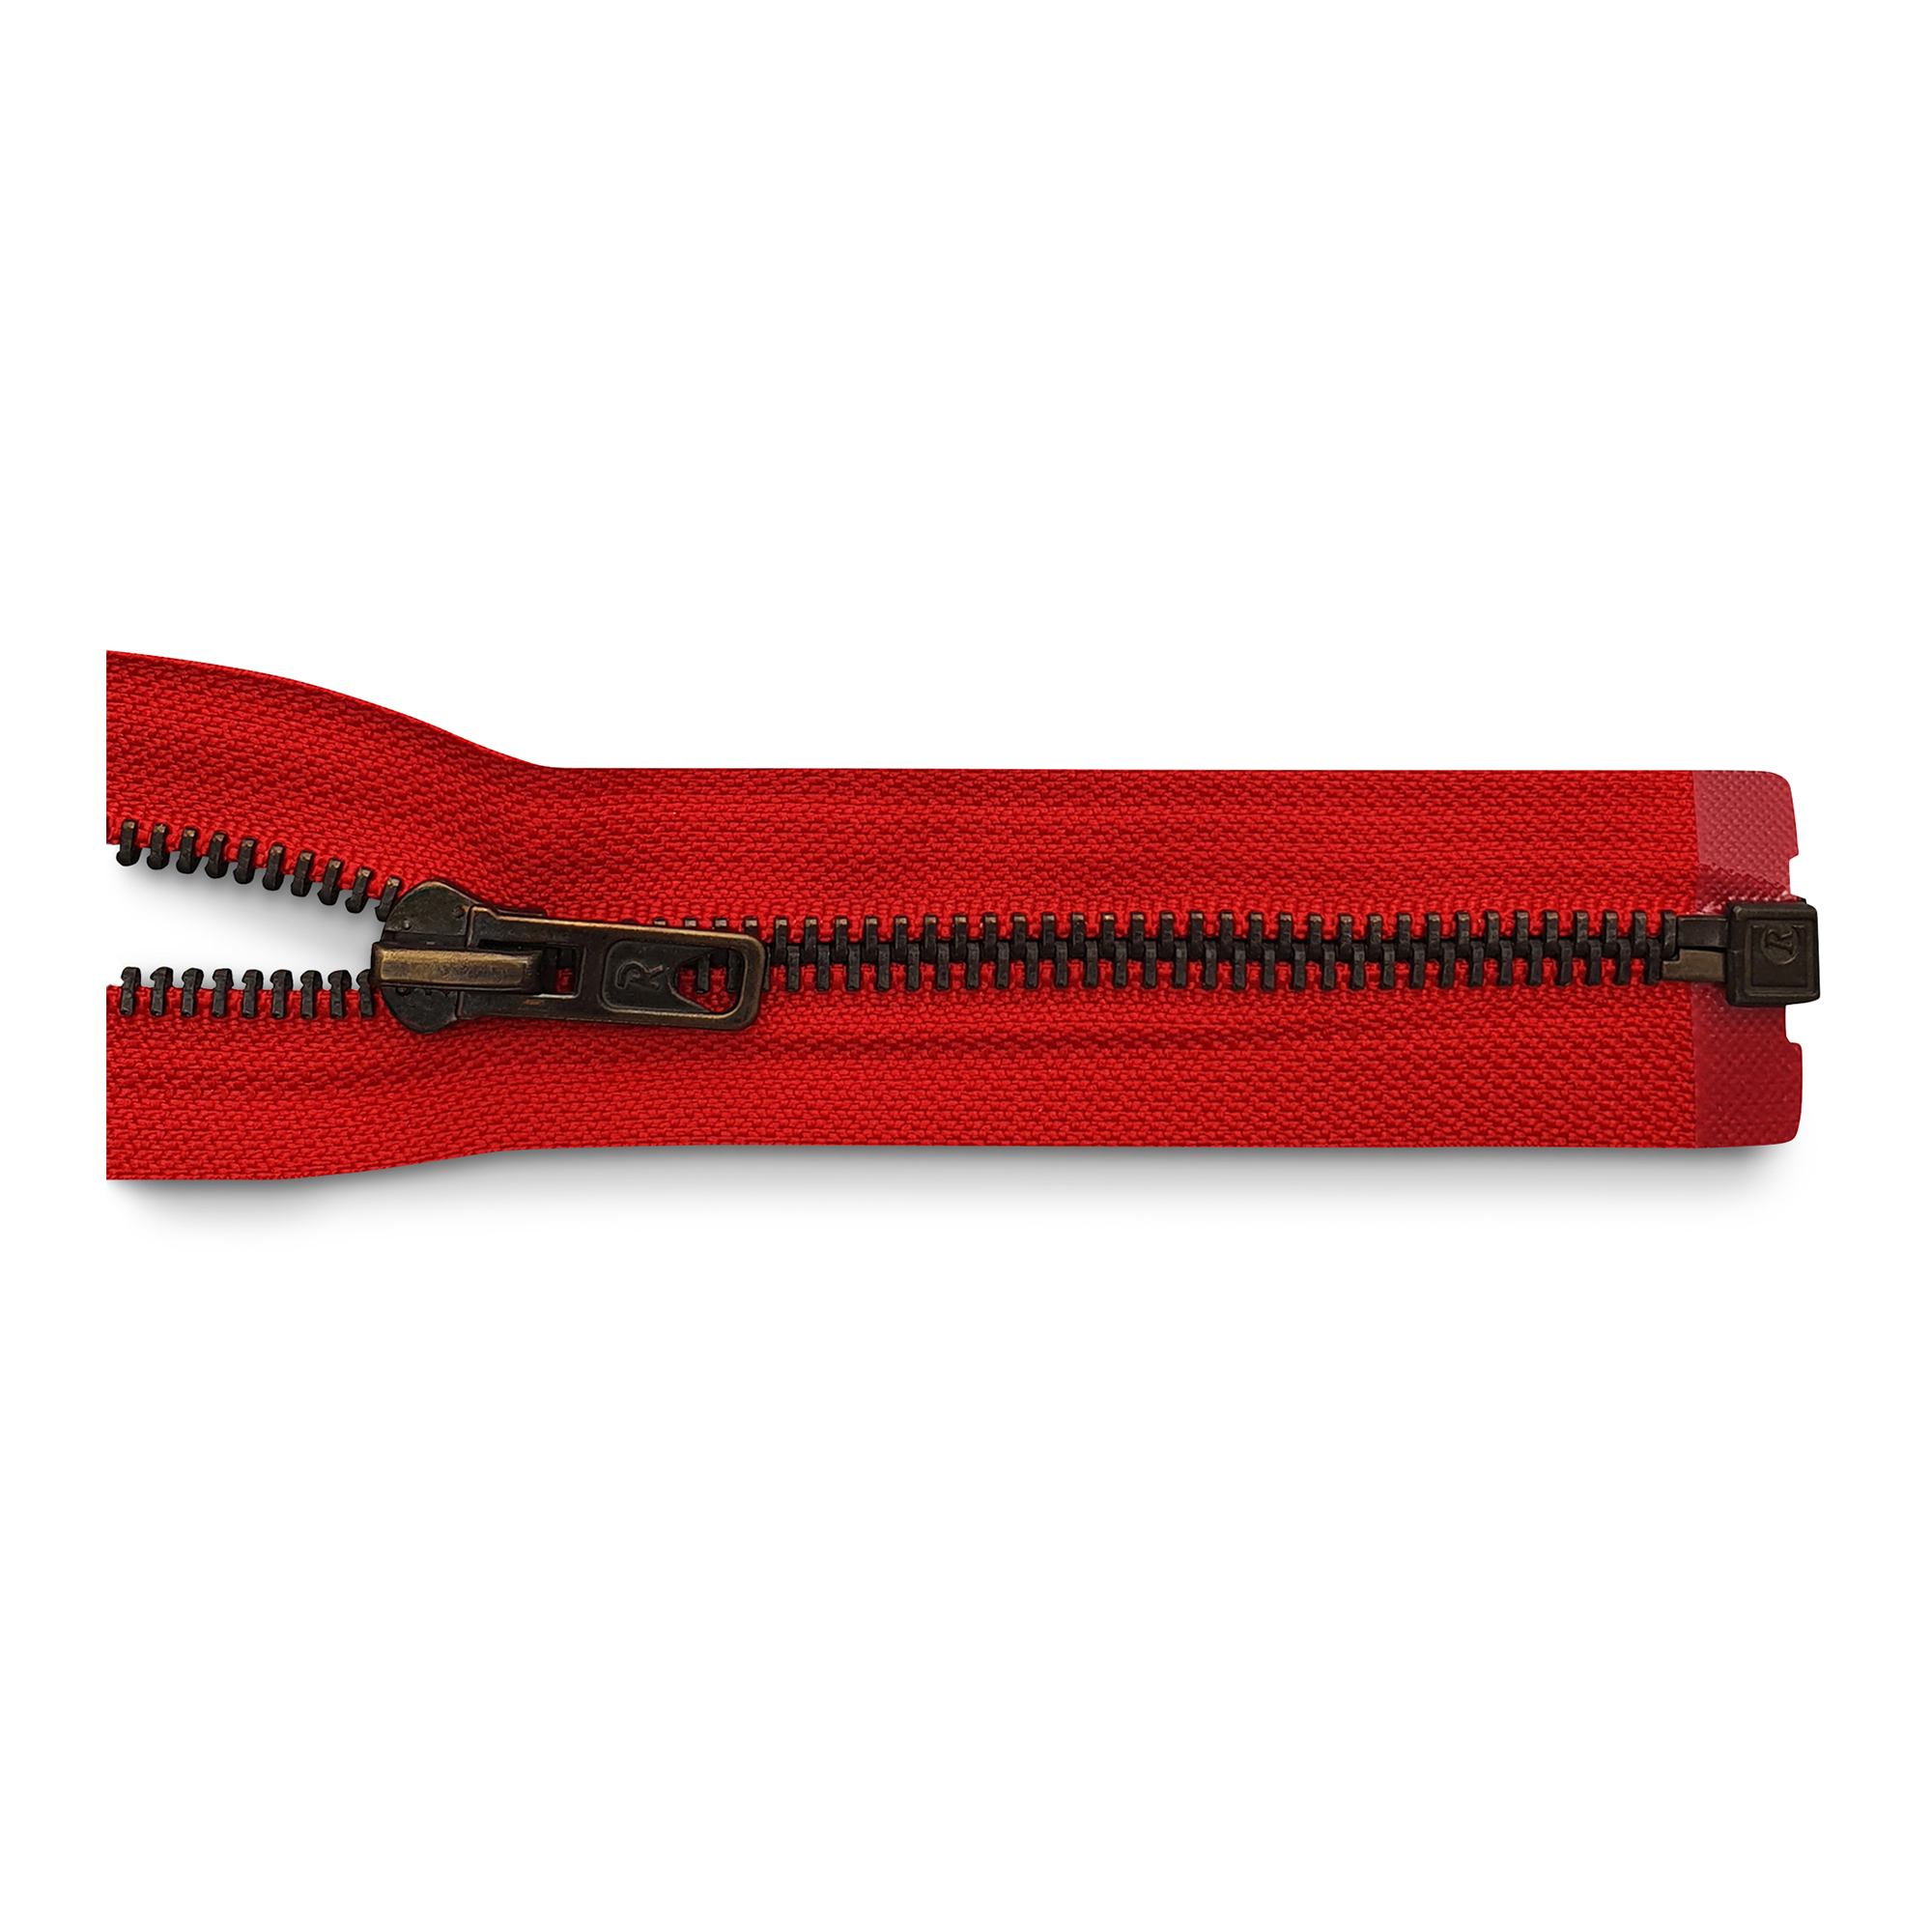 Reißverschluss, teilbar, Metall brüniert breit, rot, hochwertiger Marken-Reißverschluss von Rubi/Barcelona